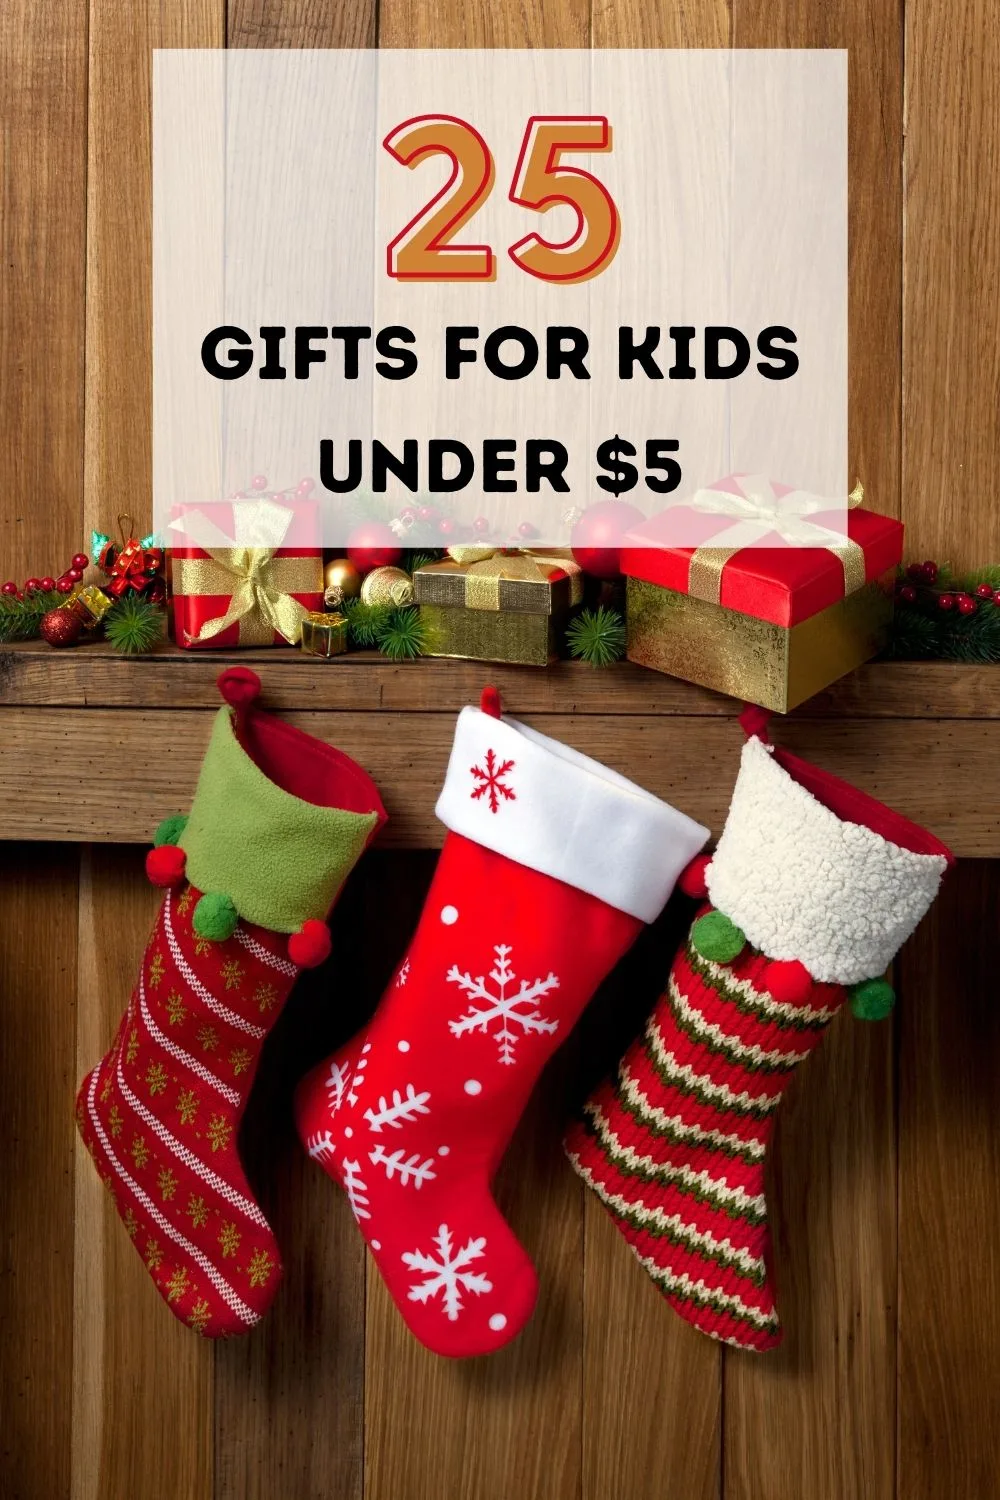 https://moneywisemoms.com/wp-content/uploads/2021/12/25-gifts-for-kids-under-5.jpg.webp